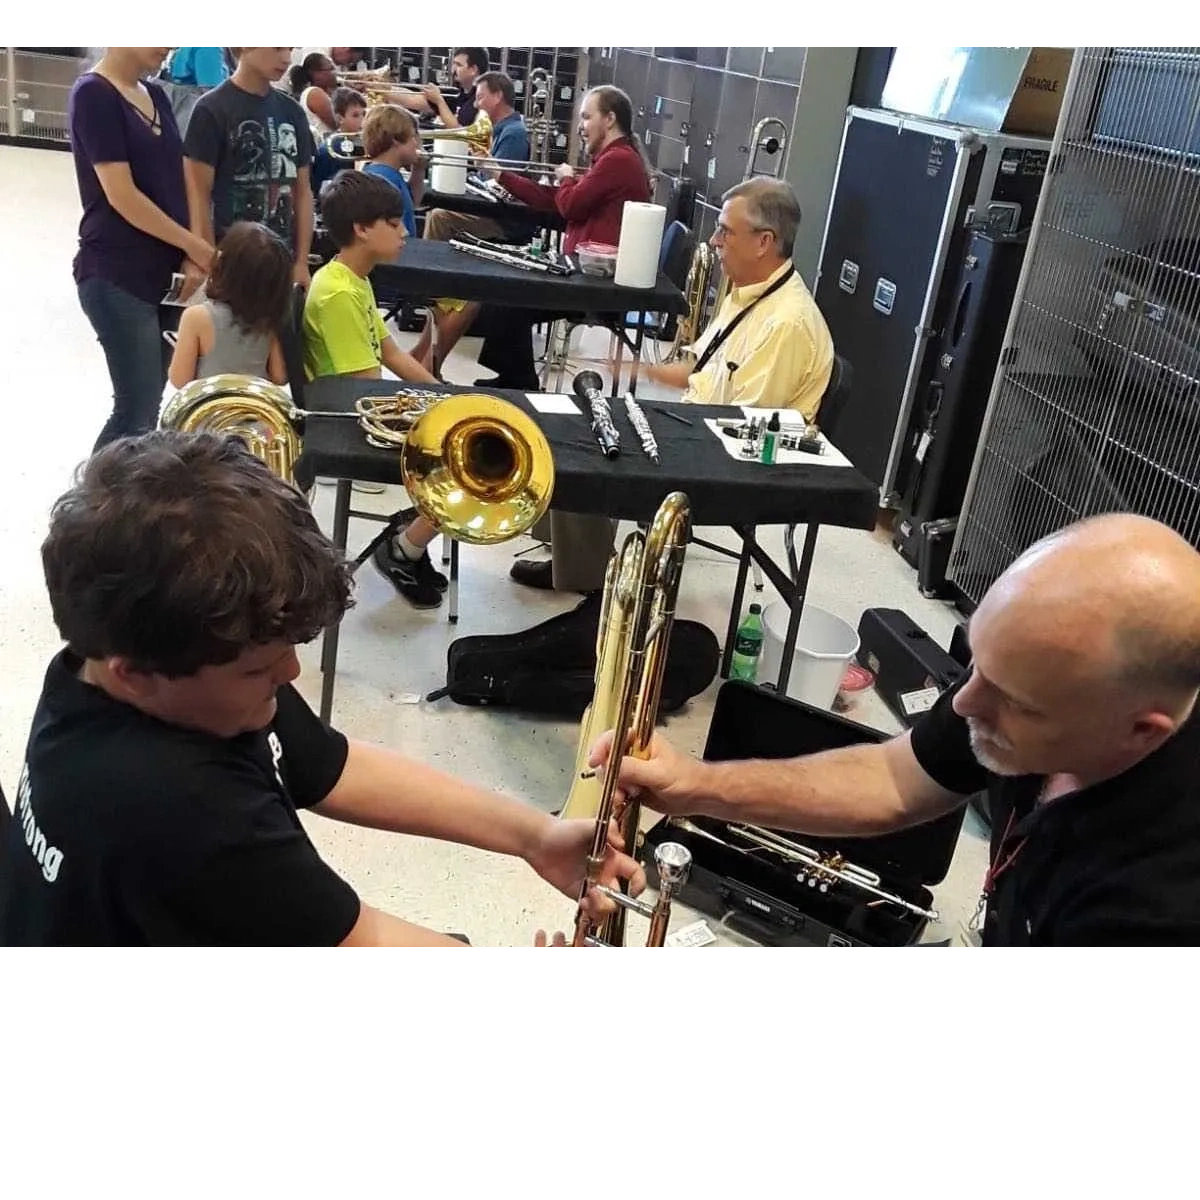 6th grader trying trombone